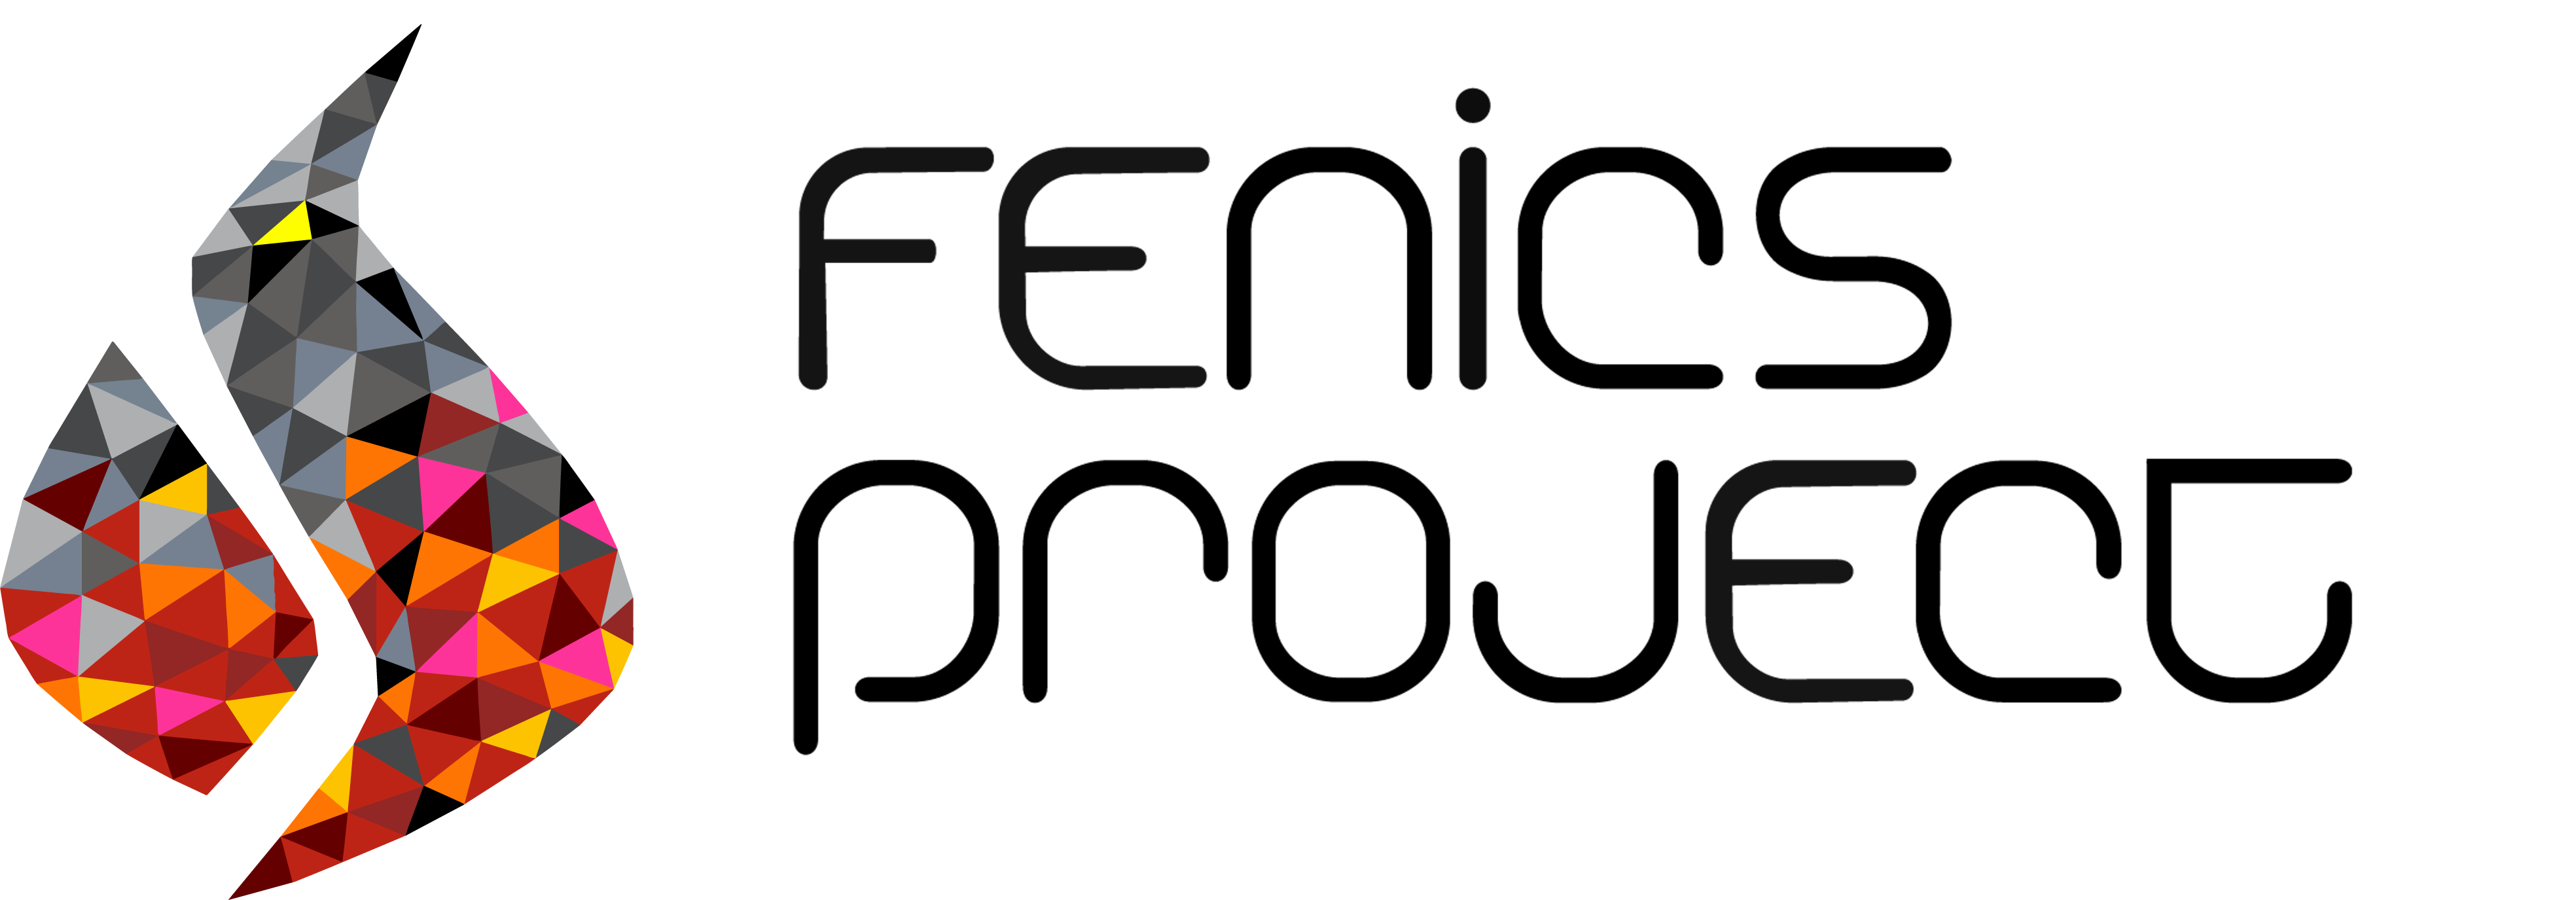 Fenics logo